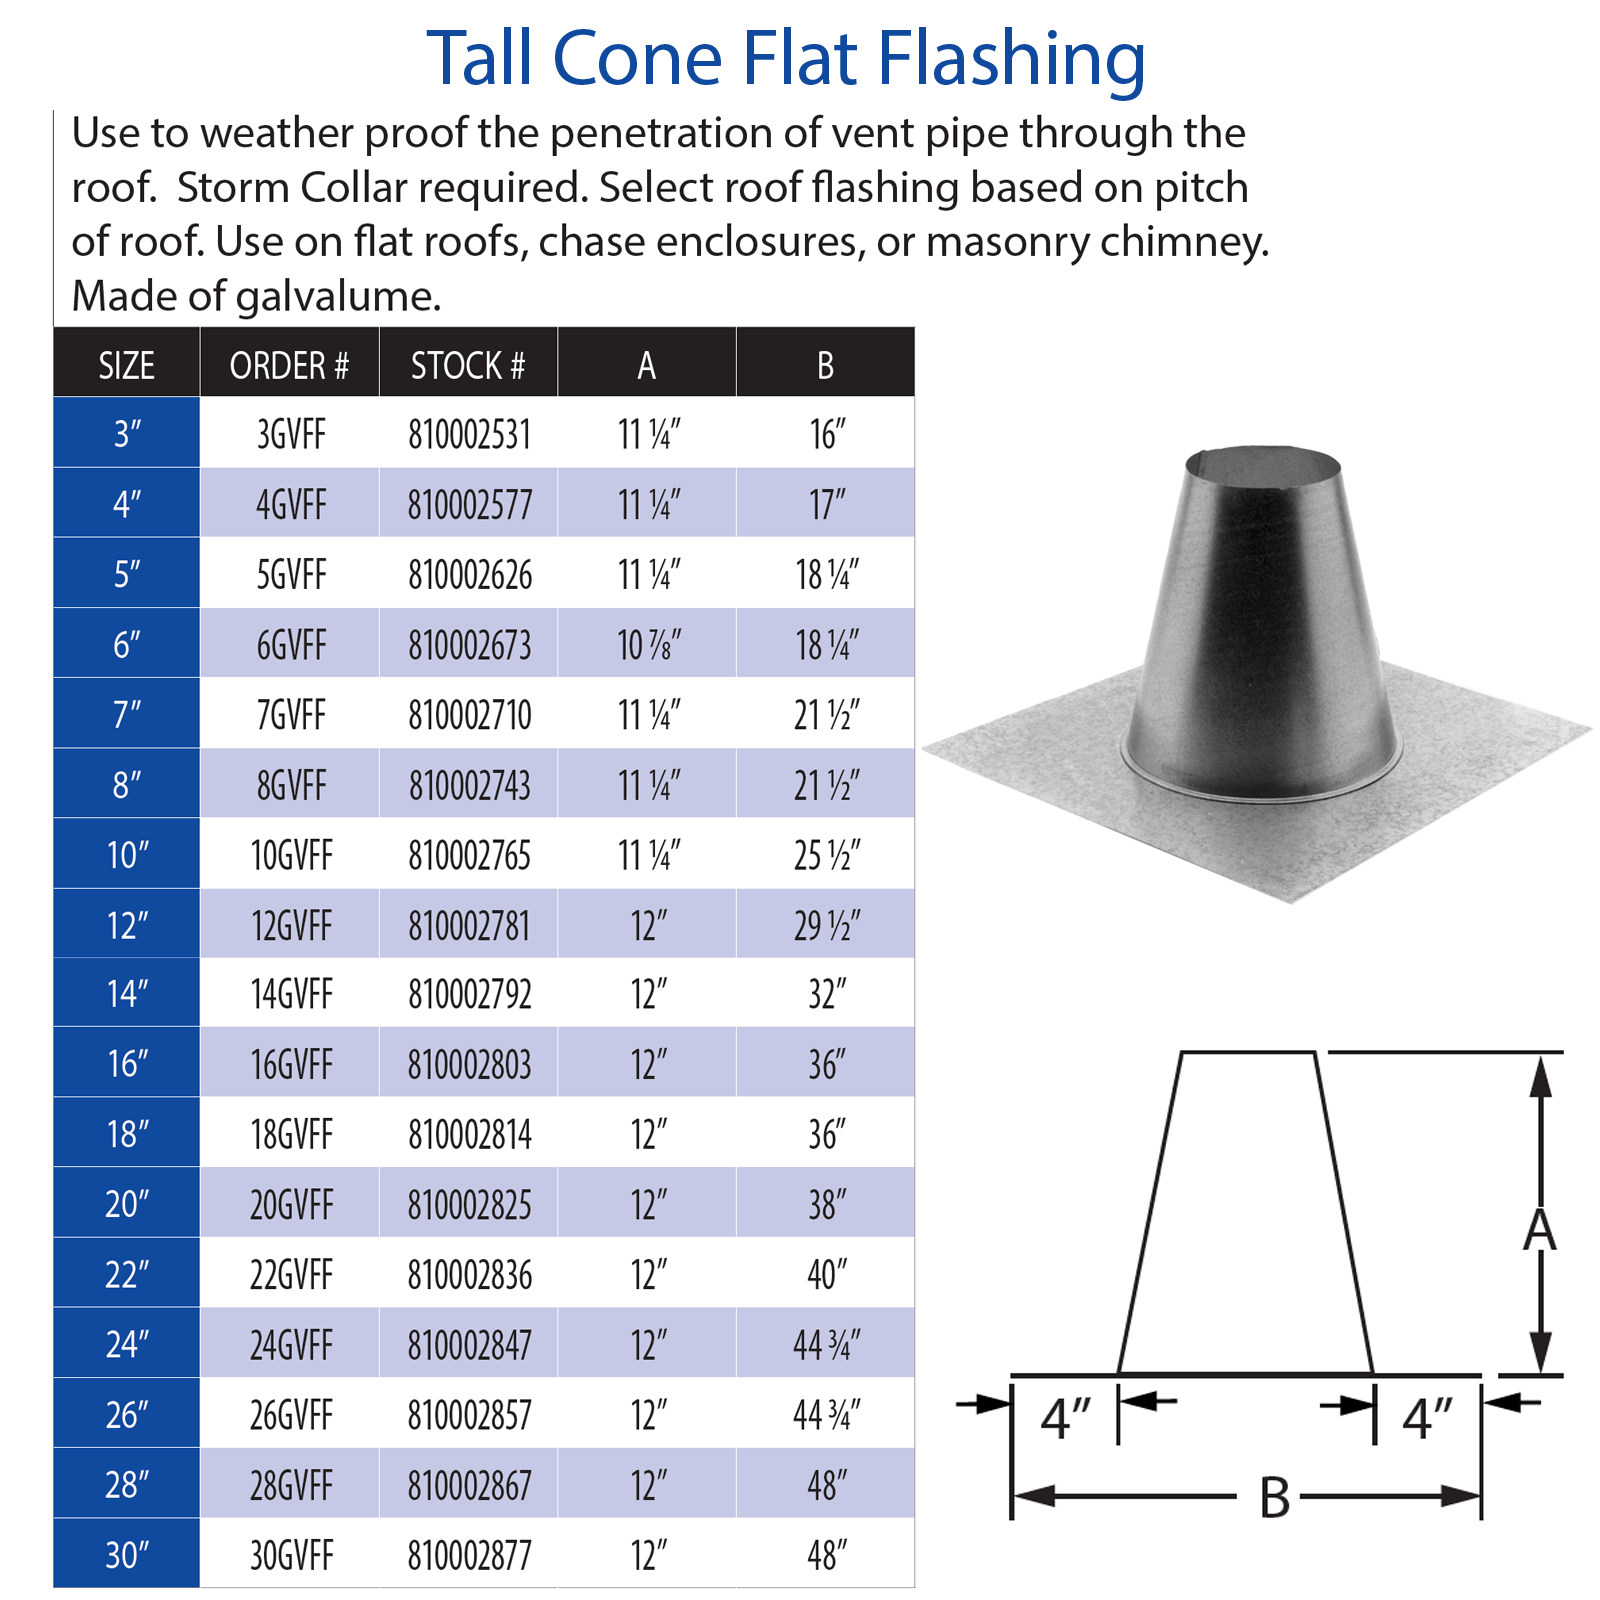 DuraVent Type B Tall Cone Flat Flashing | 5GVFF